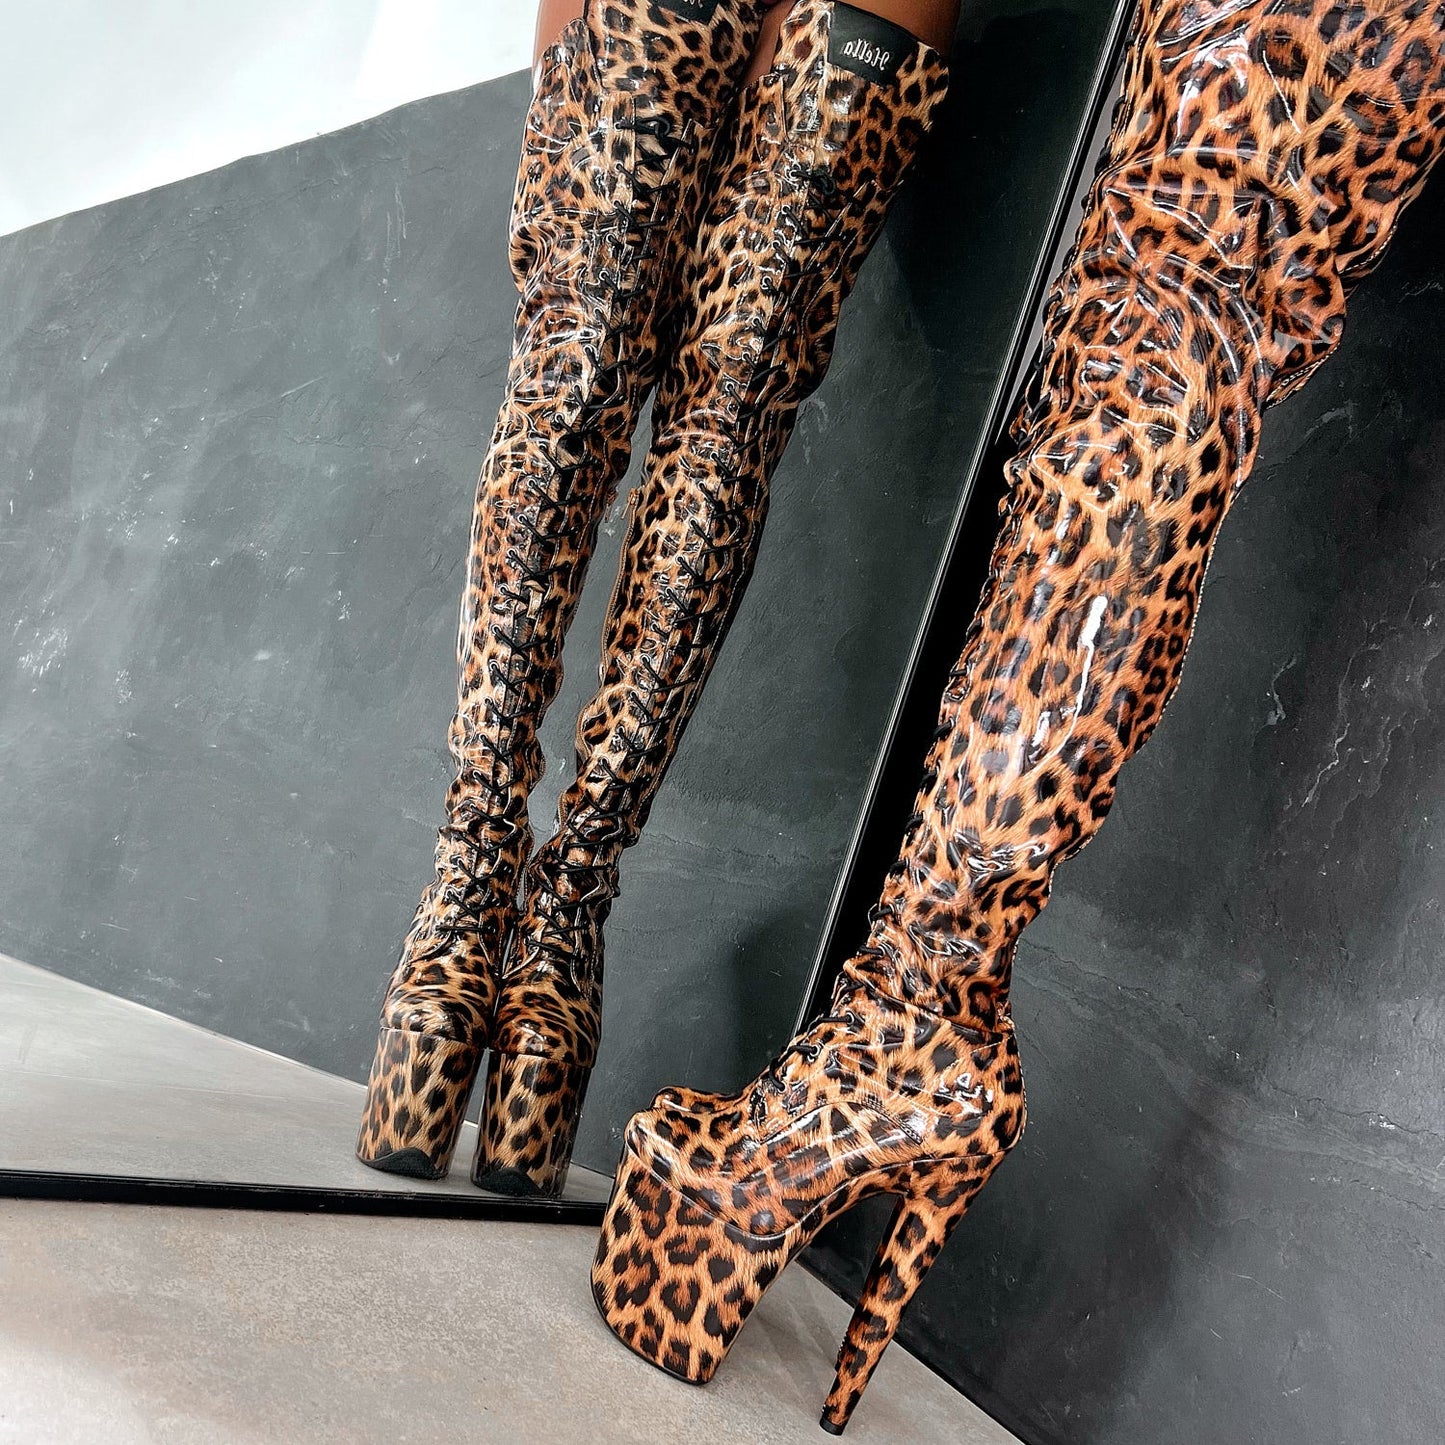 Leopard Thigh High - 8 INCH, stripper shoe, stripper heel, pole heel, not a pleaser, platform, dancer, pole dance, floor work